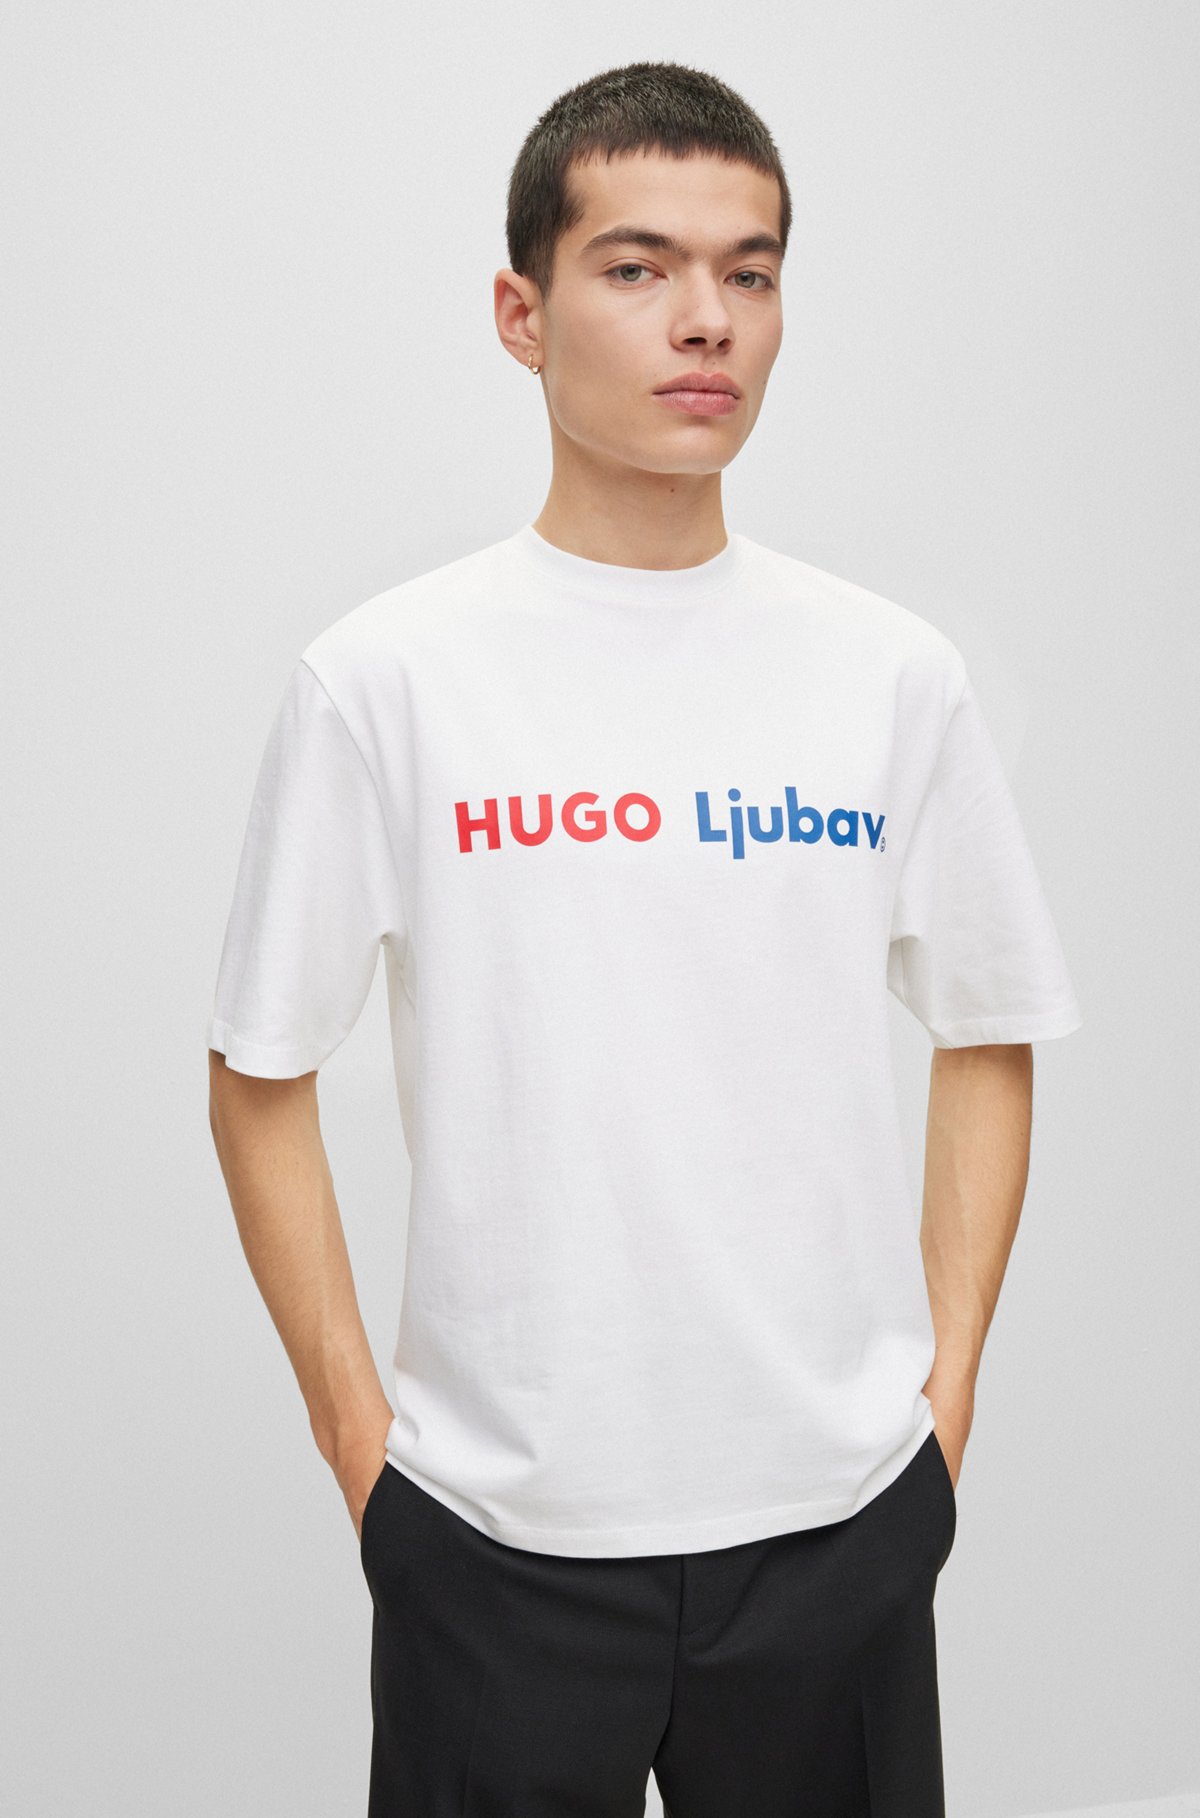 HUGO x LJUBAV cotton-jersey T-shirt with collaborative branding, White